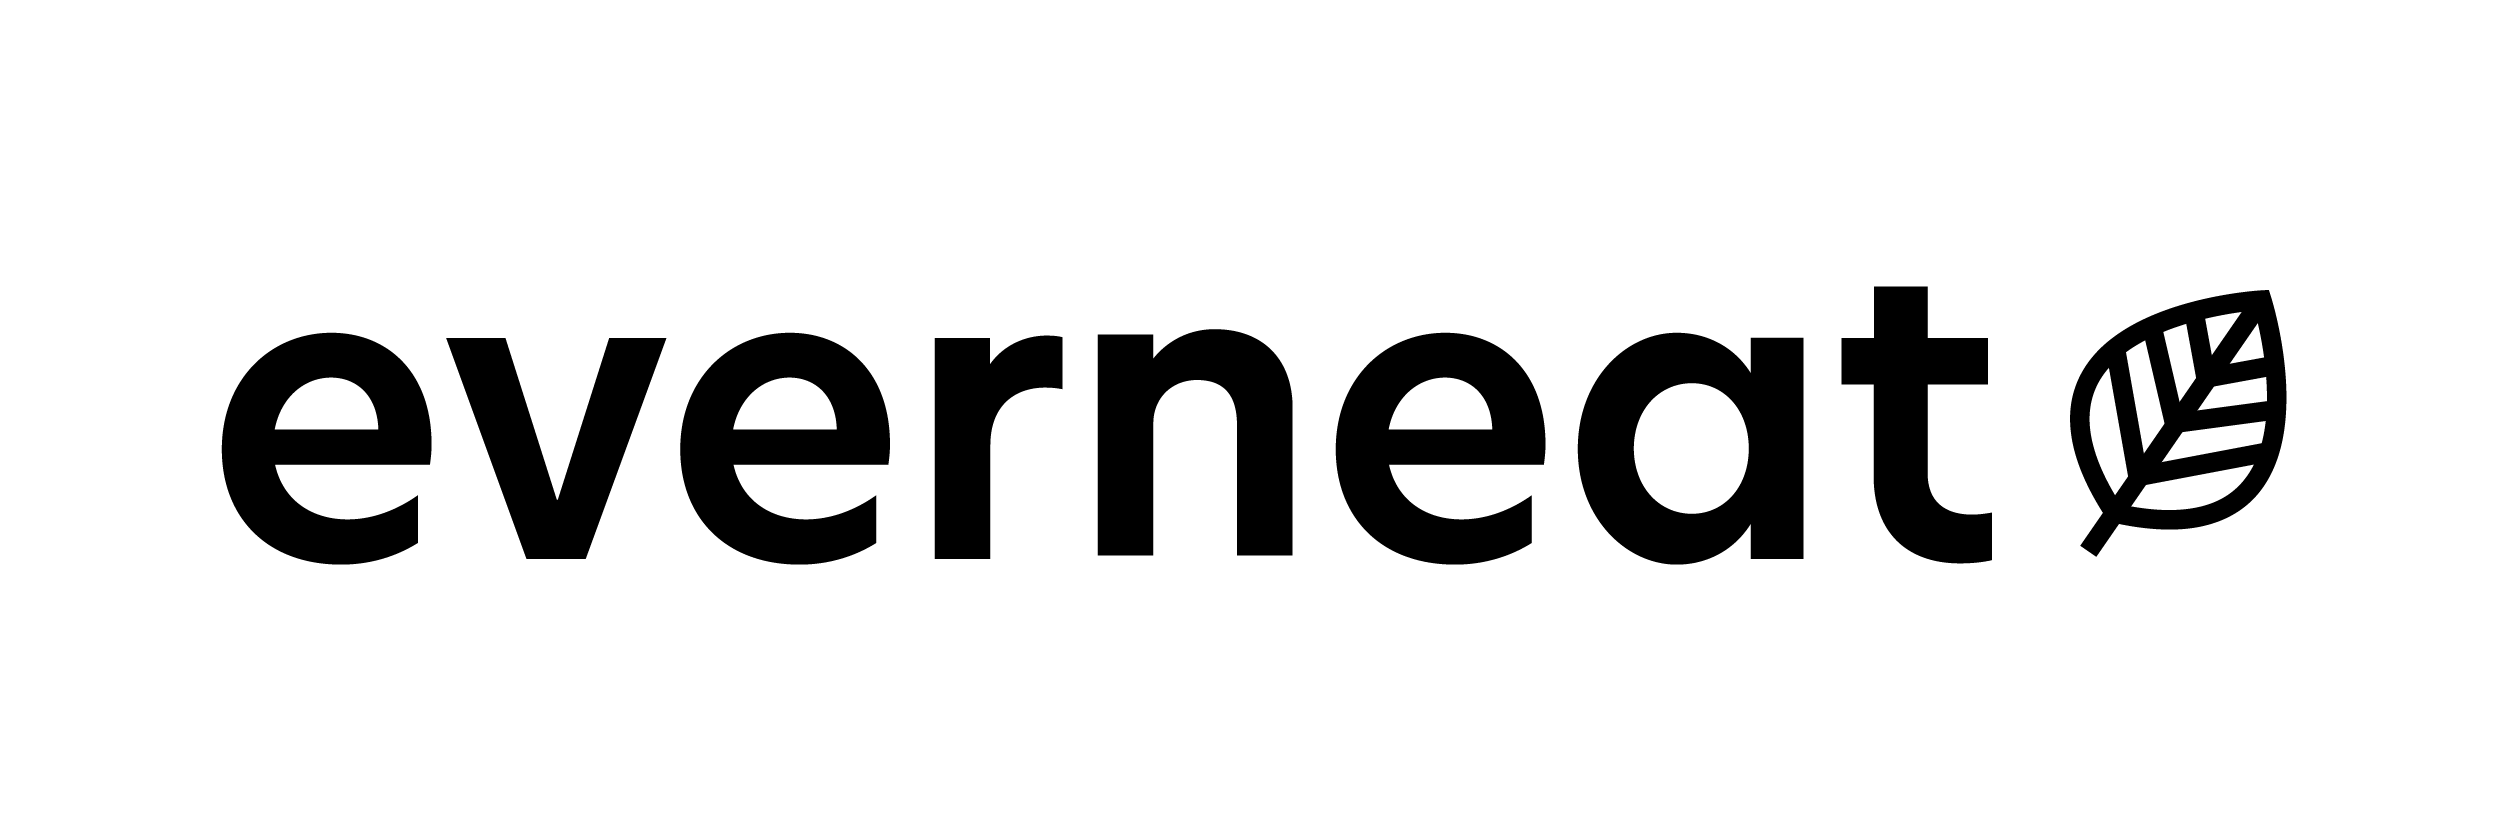 Everneat logo